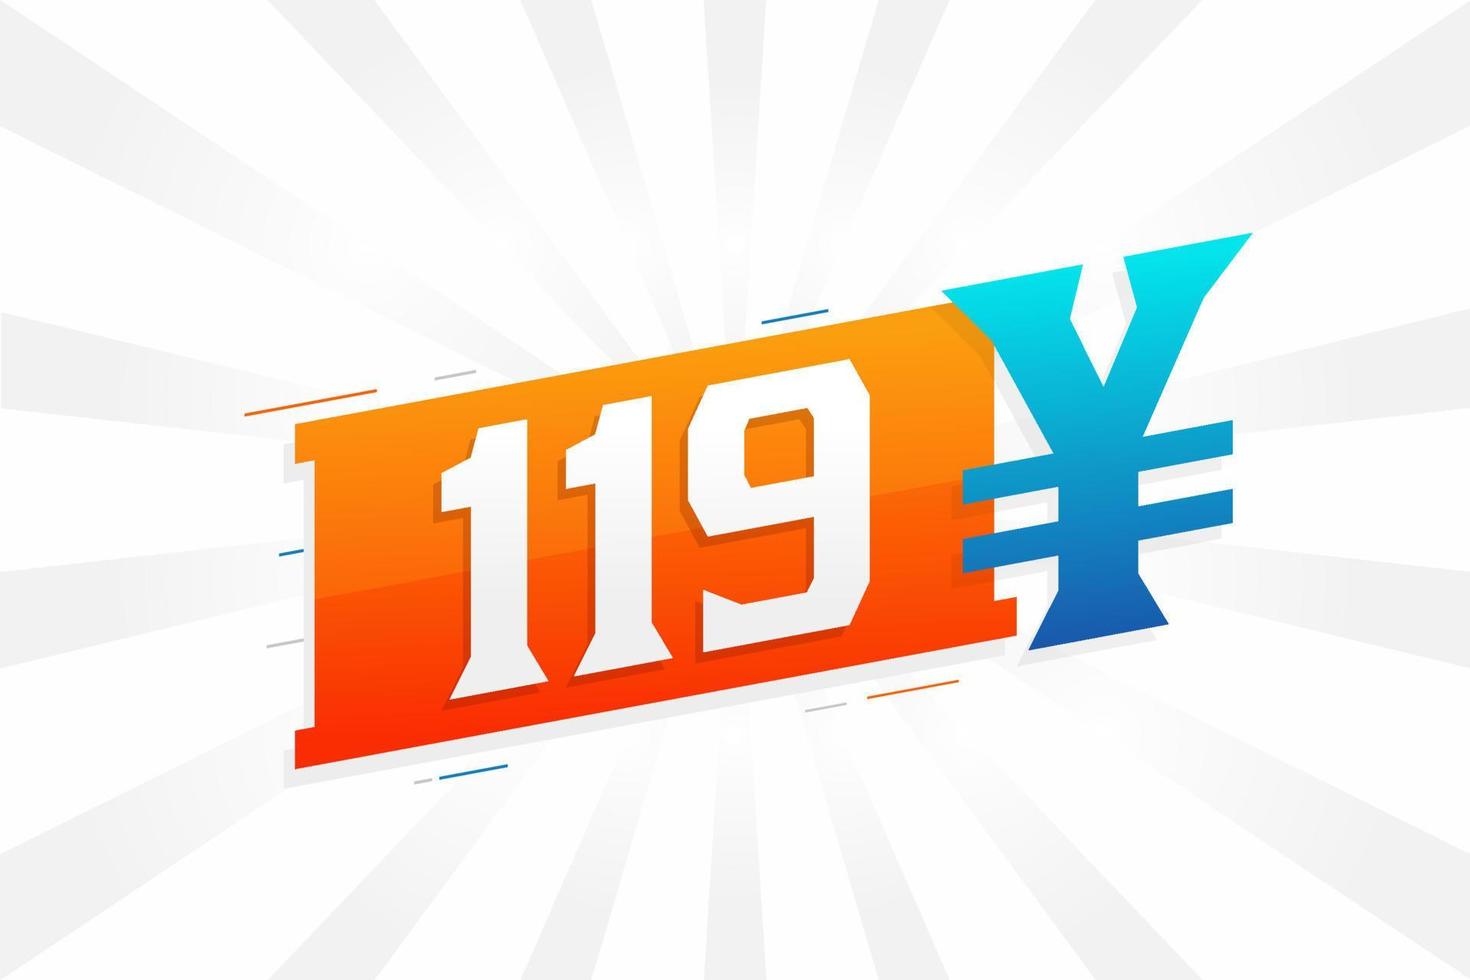 119 yuan Cinese moneta vettore testo simbolo. 119 yen giapponese moneta i soldi azione vettore